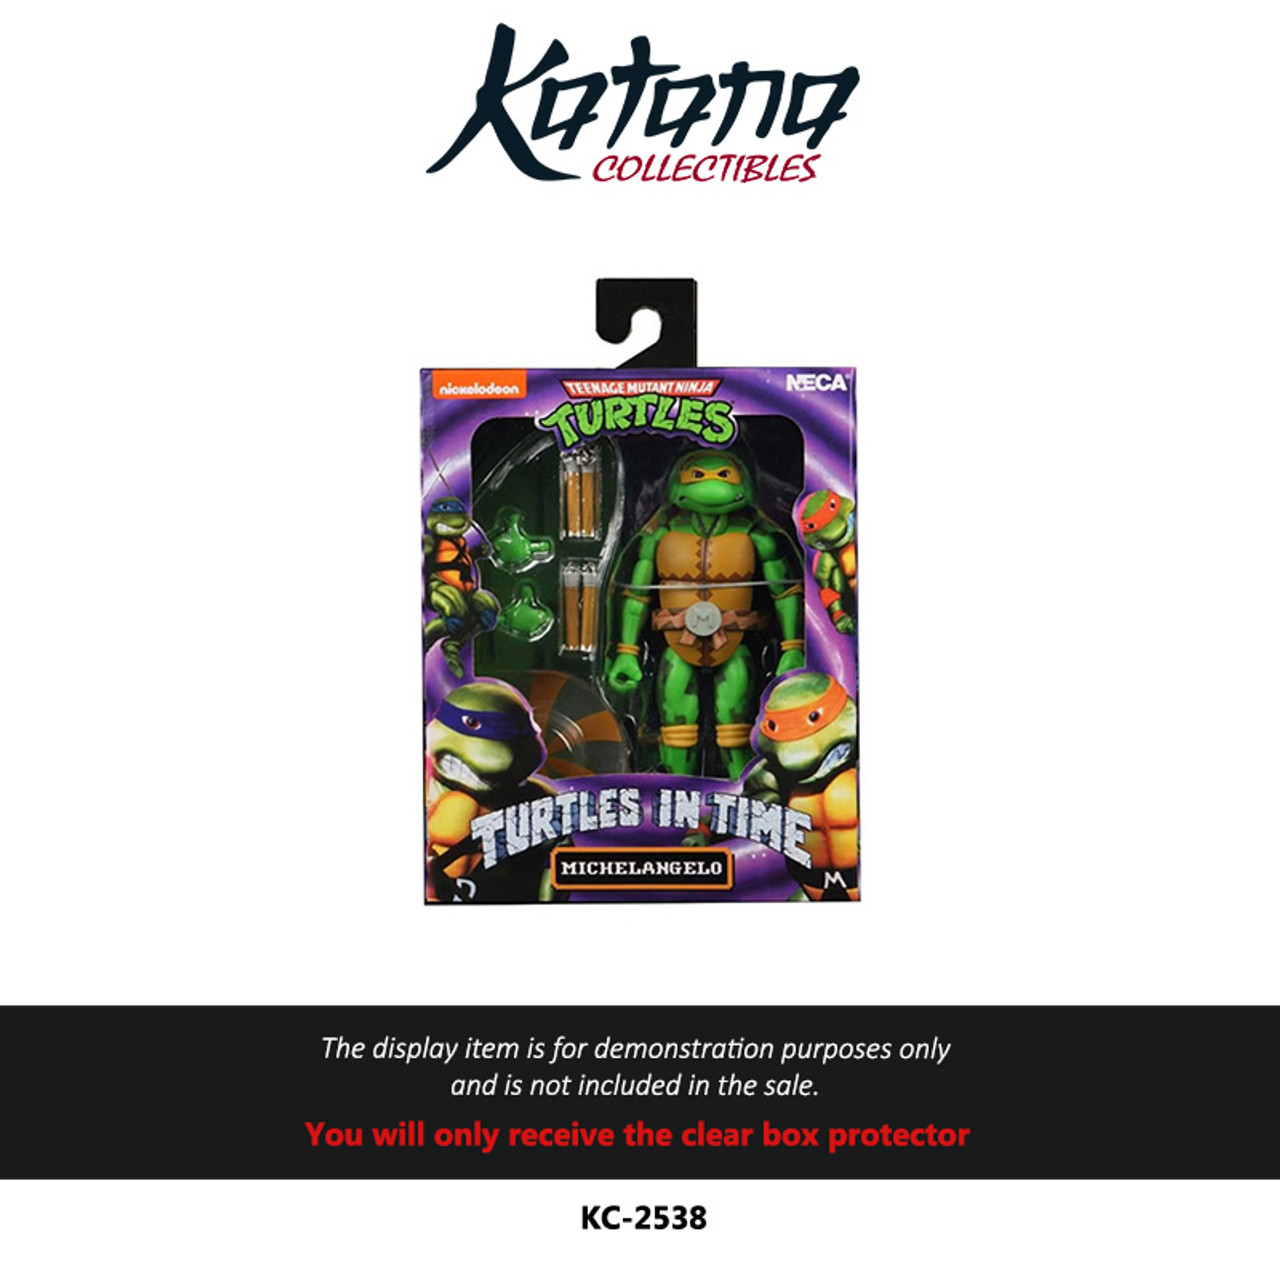 Katana Collectibles Protector For NECA Teenage Mutant Ninja Turtles Turtles in Time 4-Pack Figures